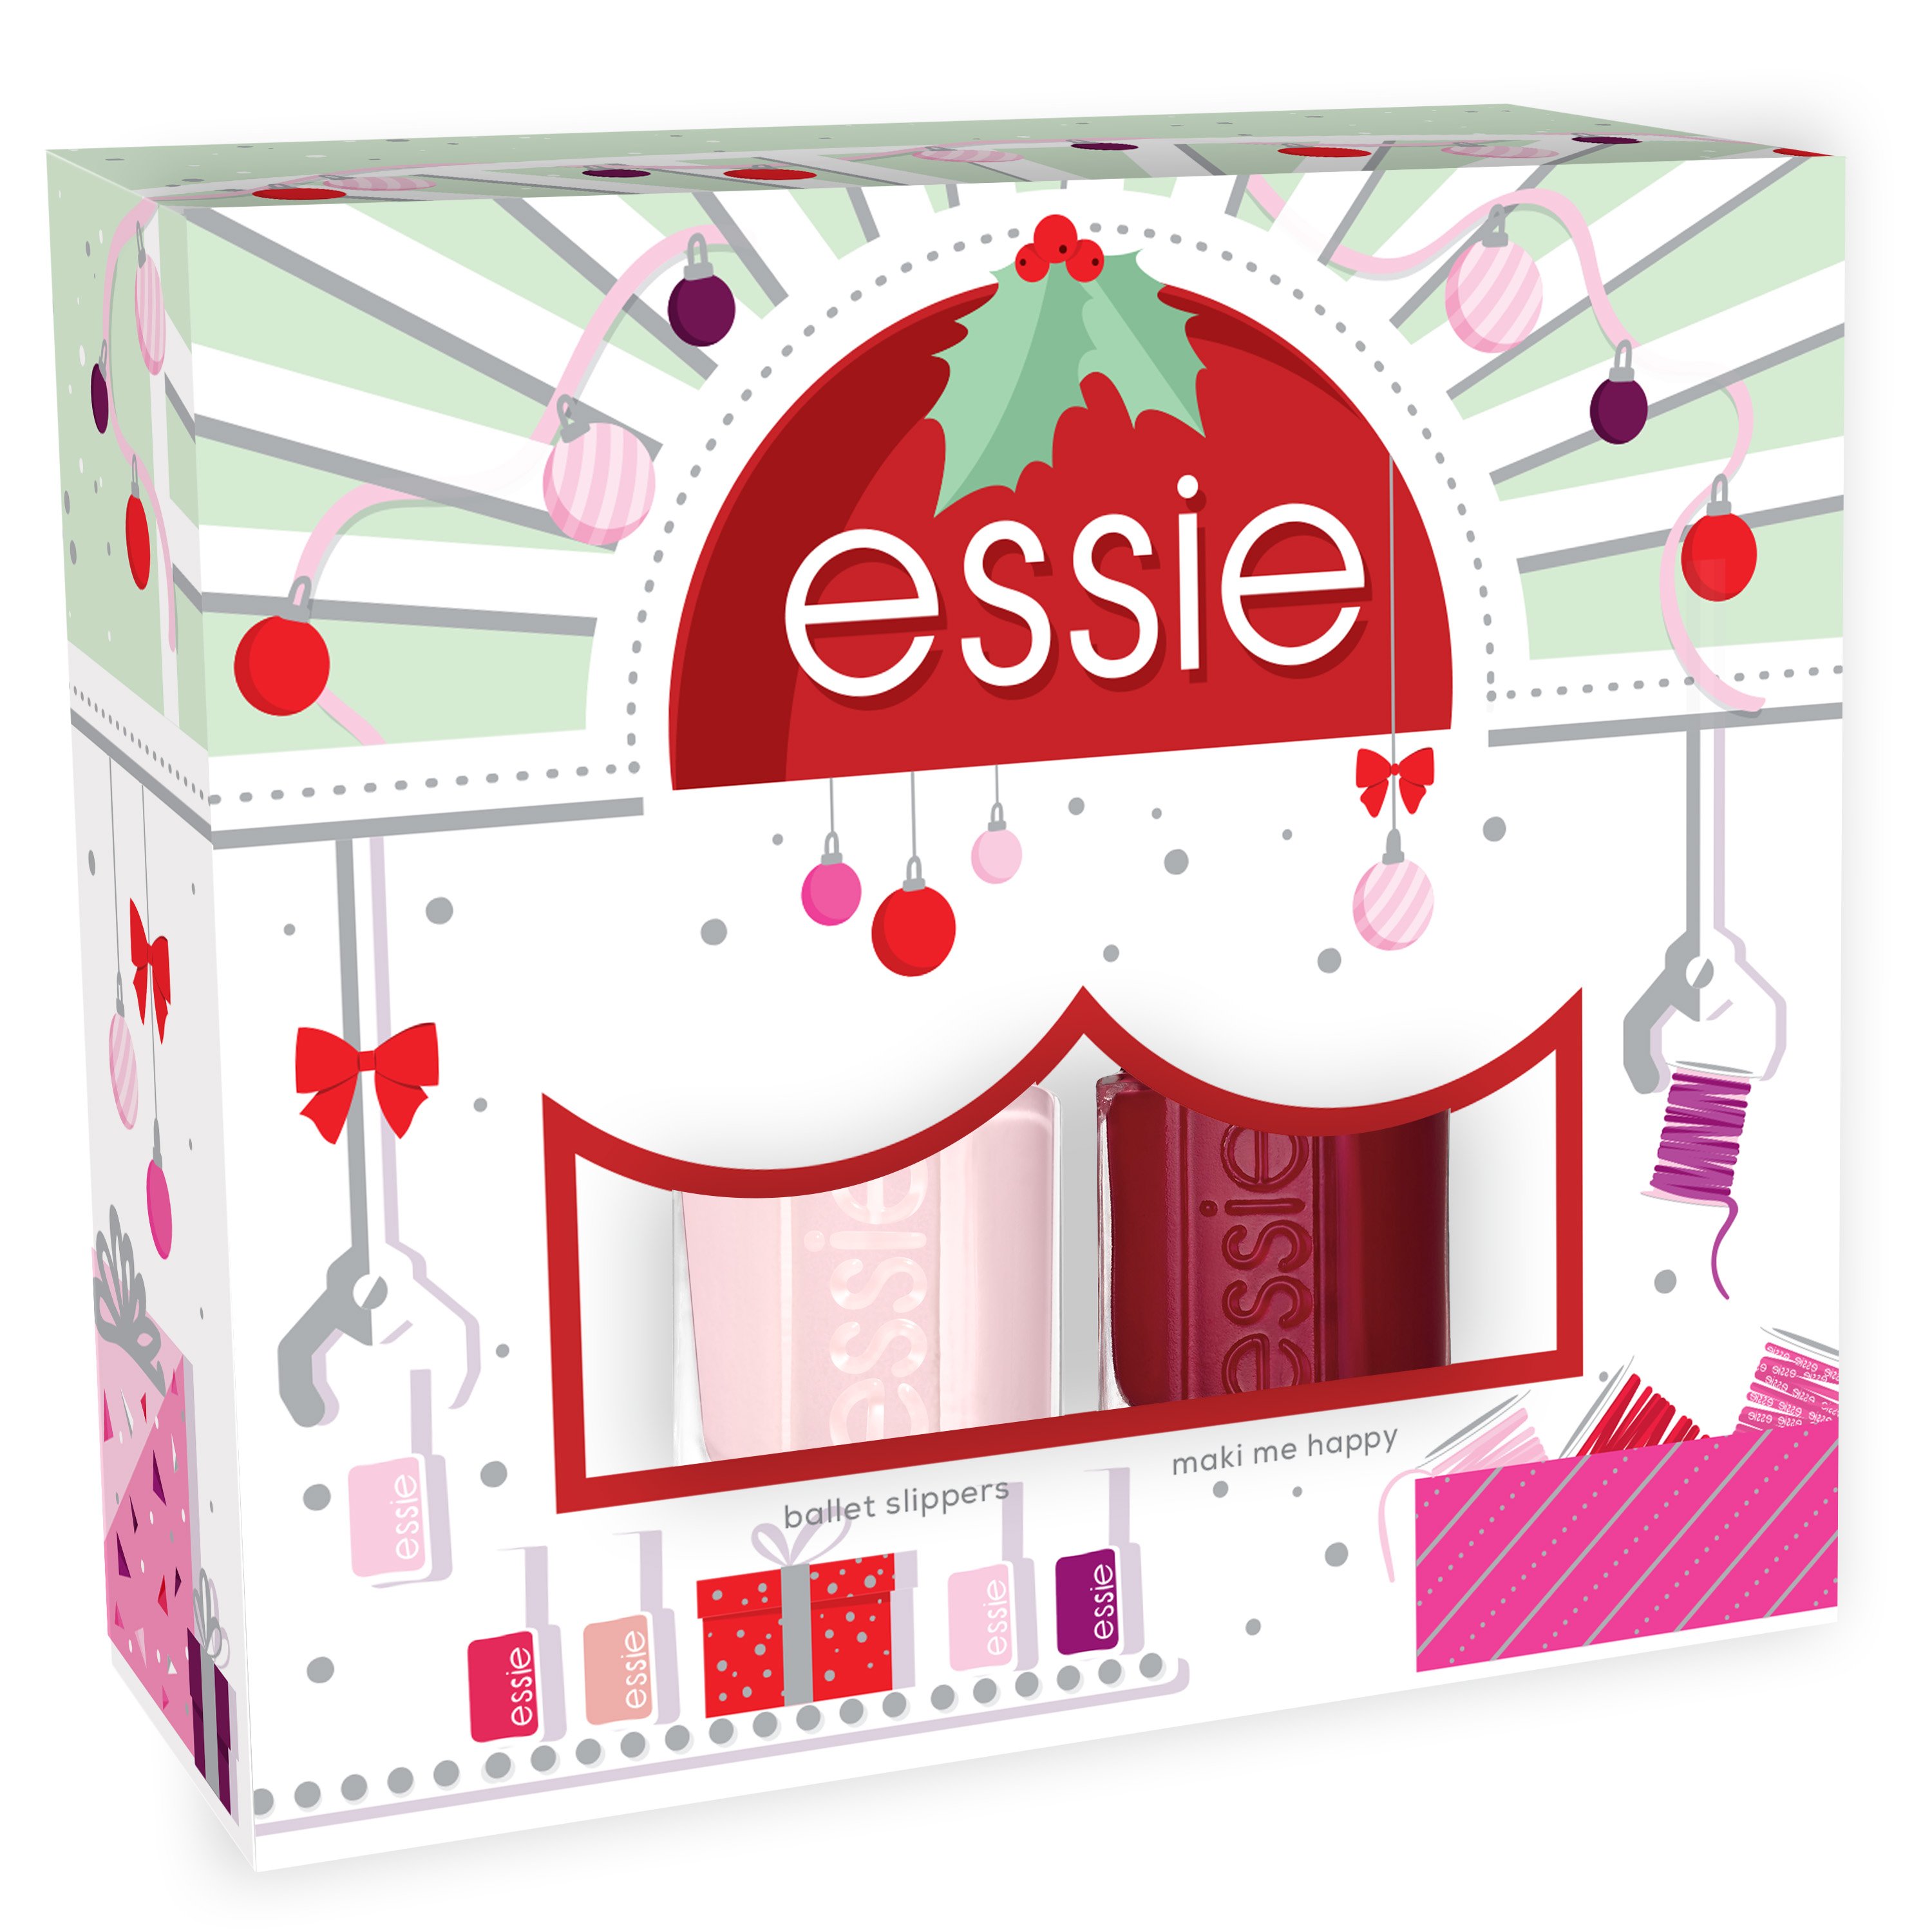 Essie - Ballet Slippers & Makime Happy - Giftset